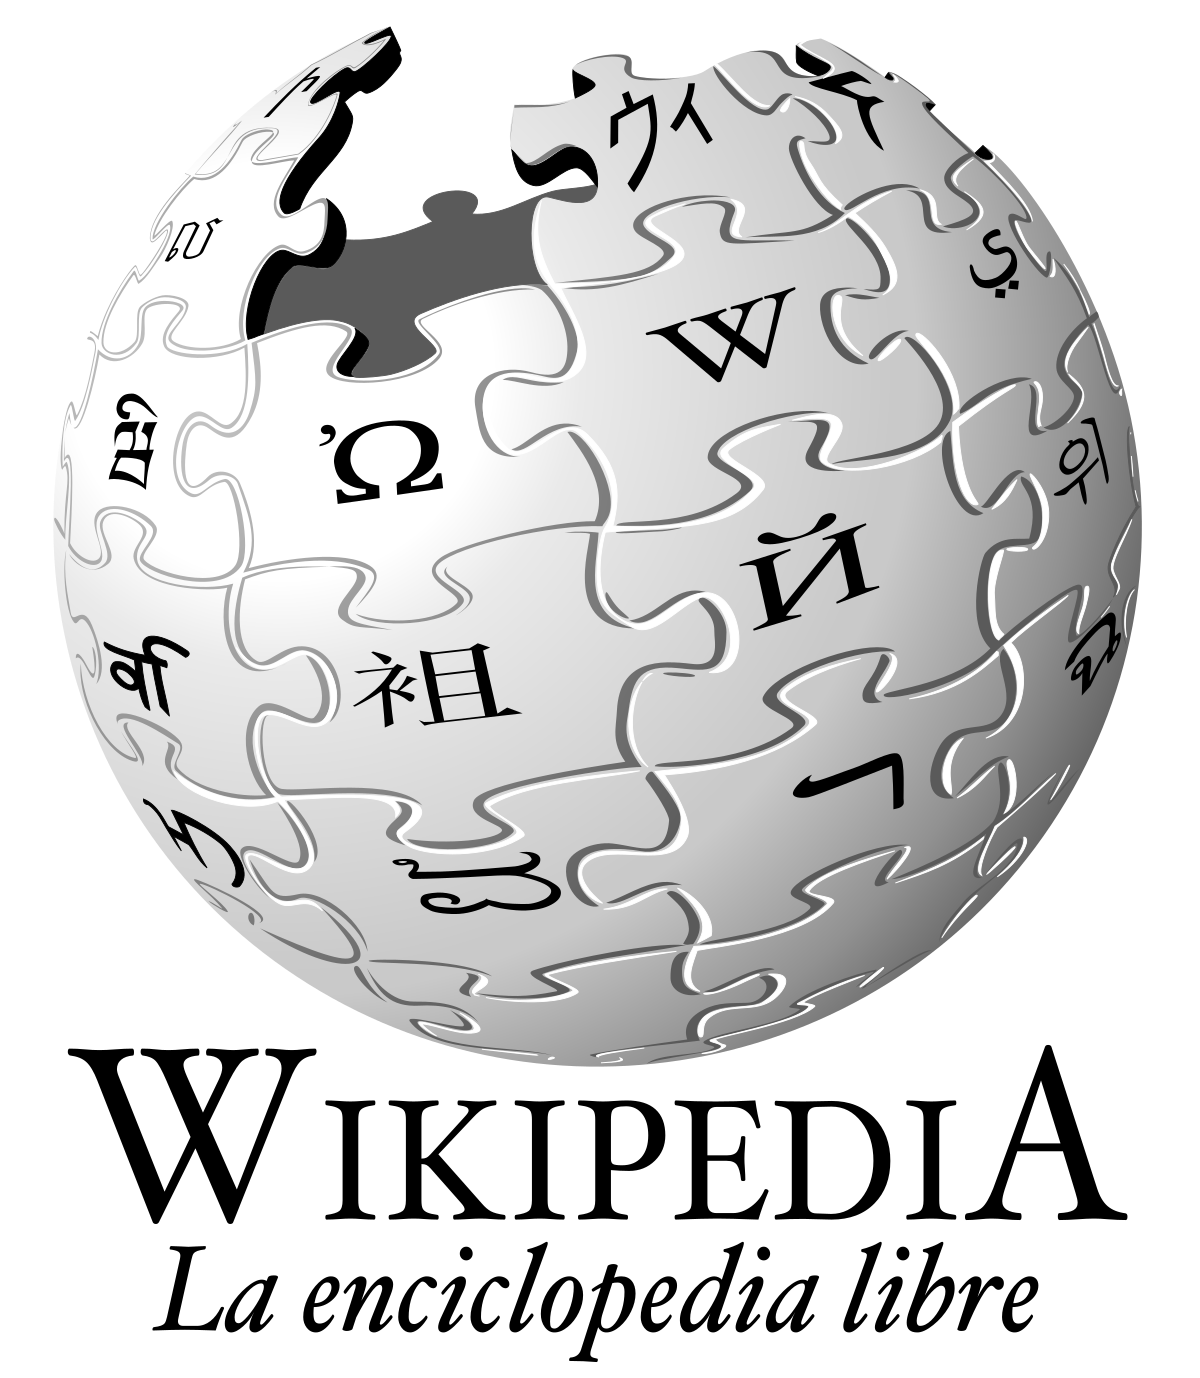 Https ru wikipedia org w. Википедия картинки. Википедия логотип. Значок Википедии. Ремипедия.